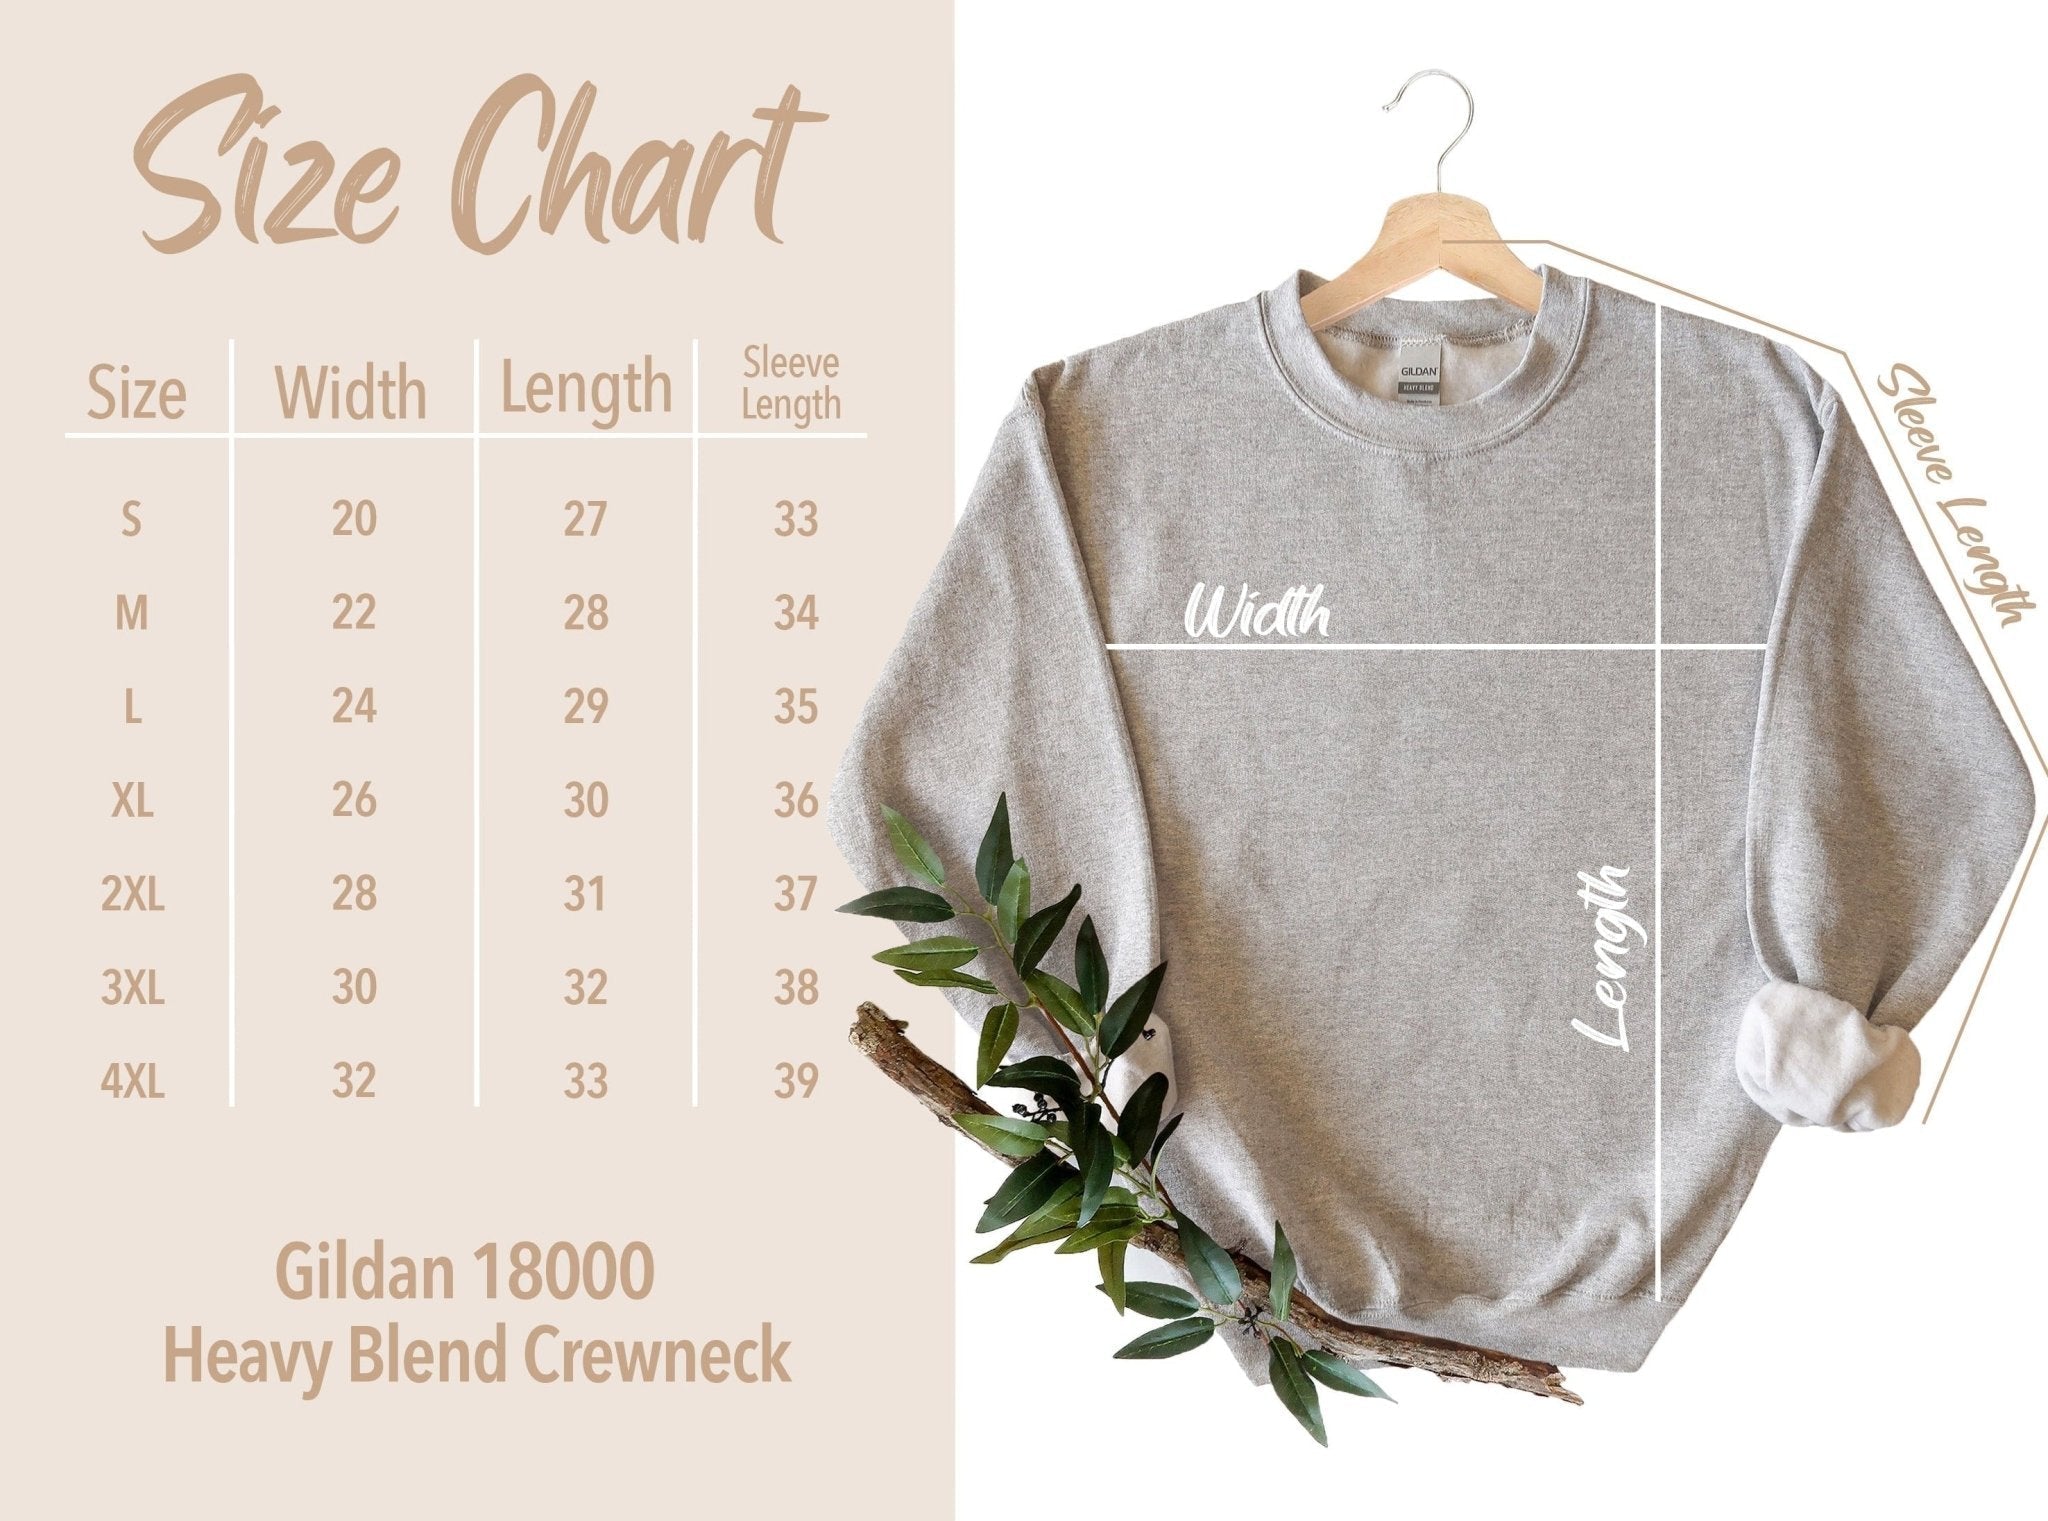 Cozy Blankets Crunchy Leaves Fall Crewneck Sweatshirt - Trendznmore